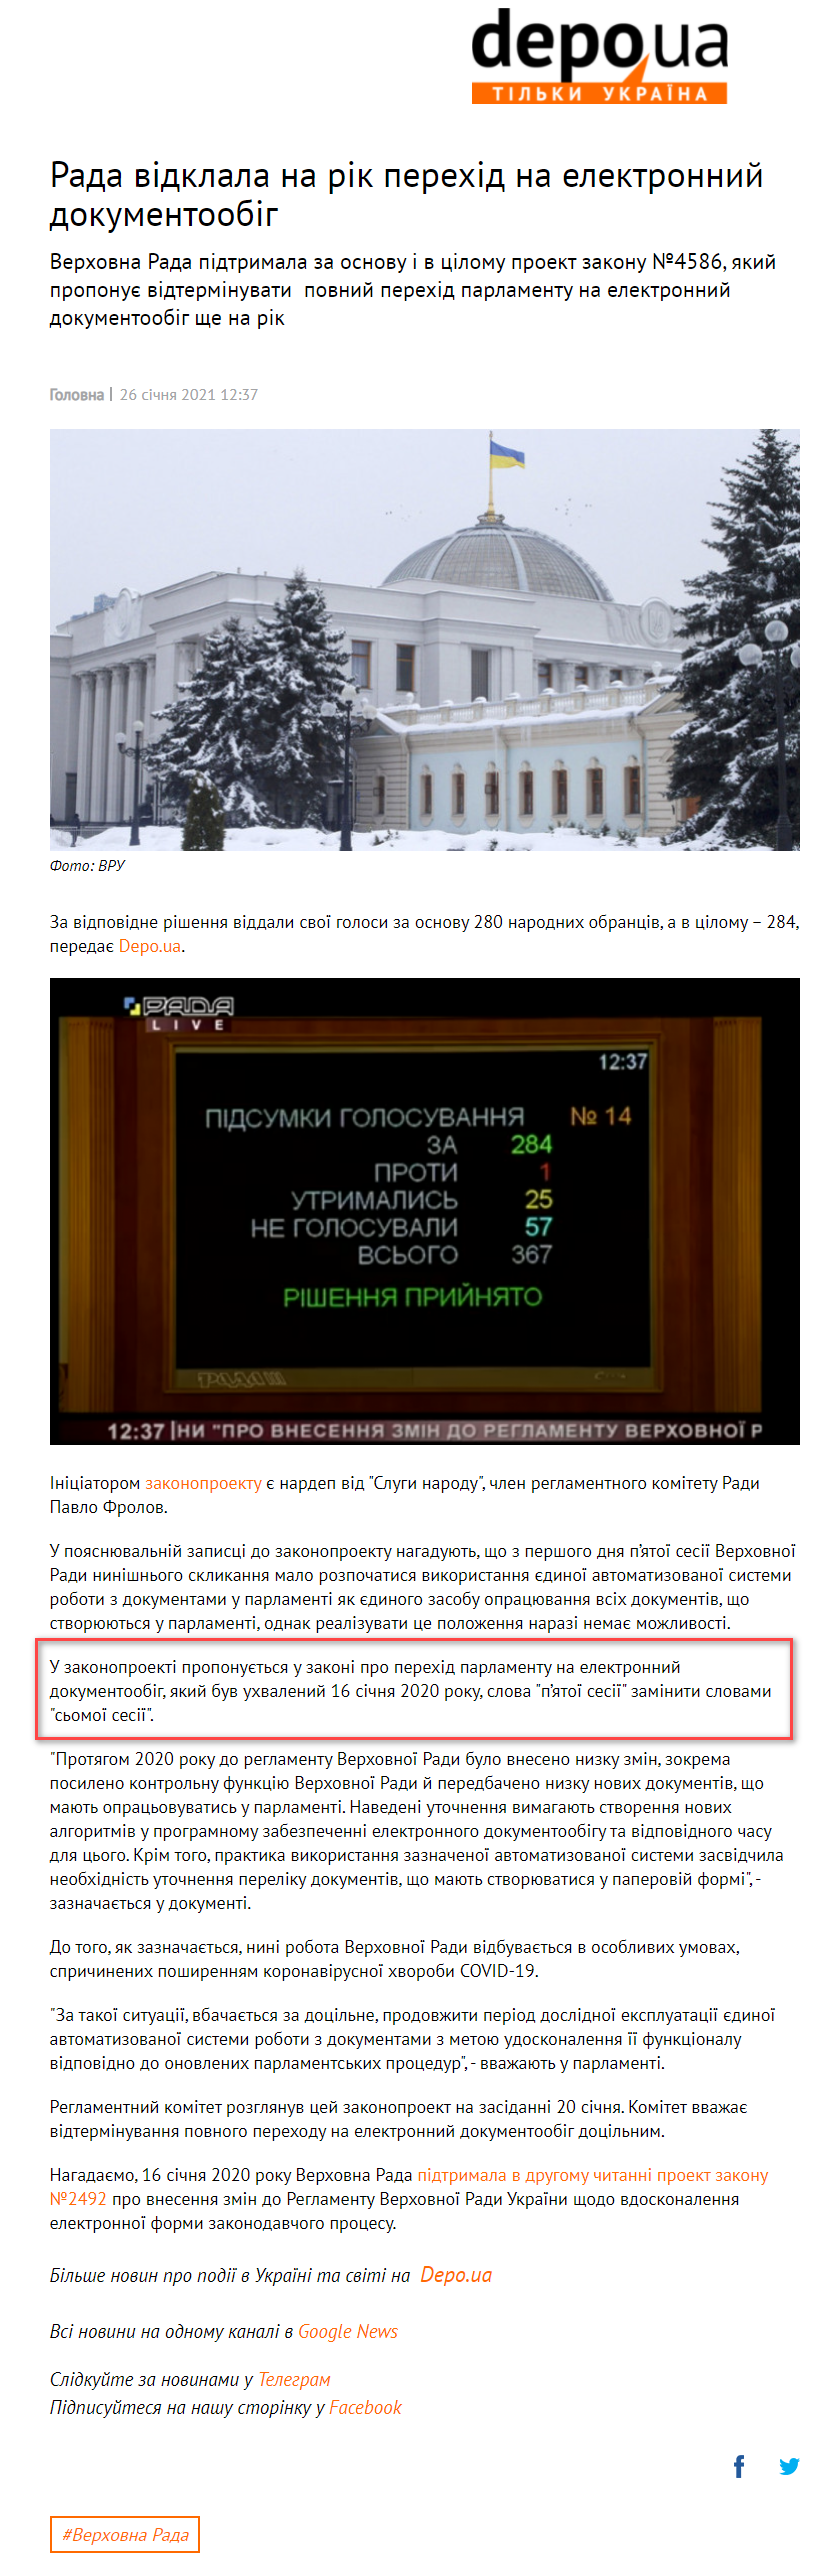 https://www.depo.ua/ukr/politics/elektronniy-parlament-rada-pidtrimala-vidterminuvannya-perekhodu-na-e-dokumentoobig-202101261276526